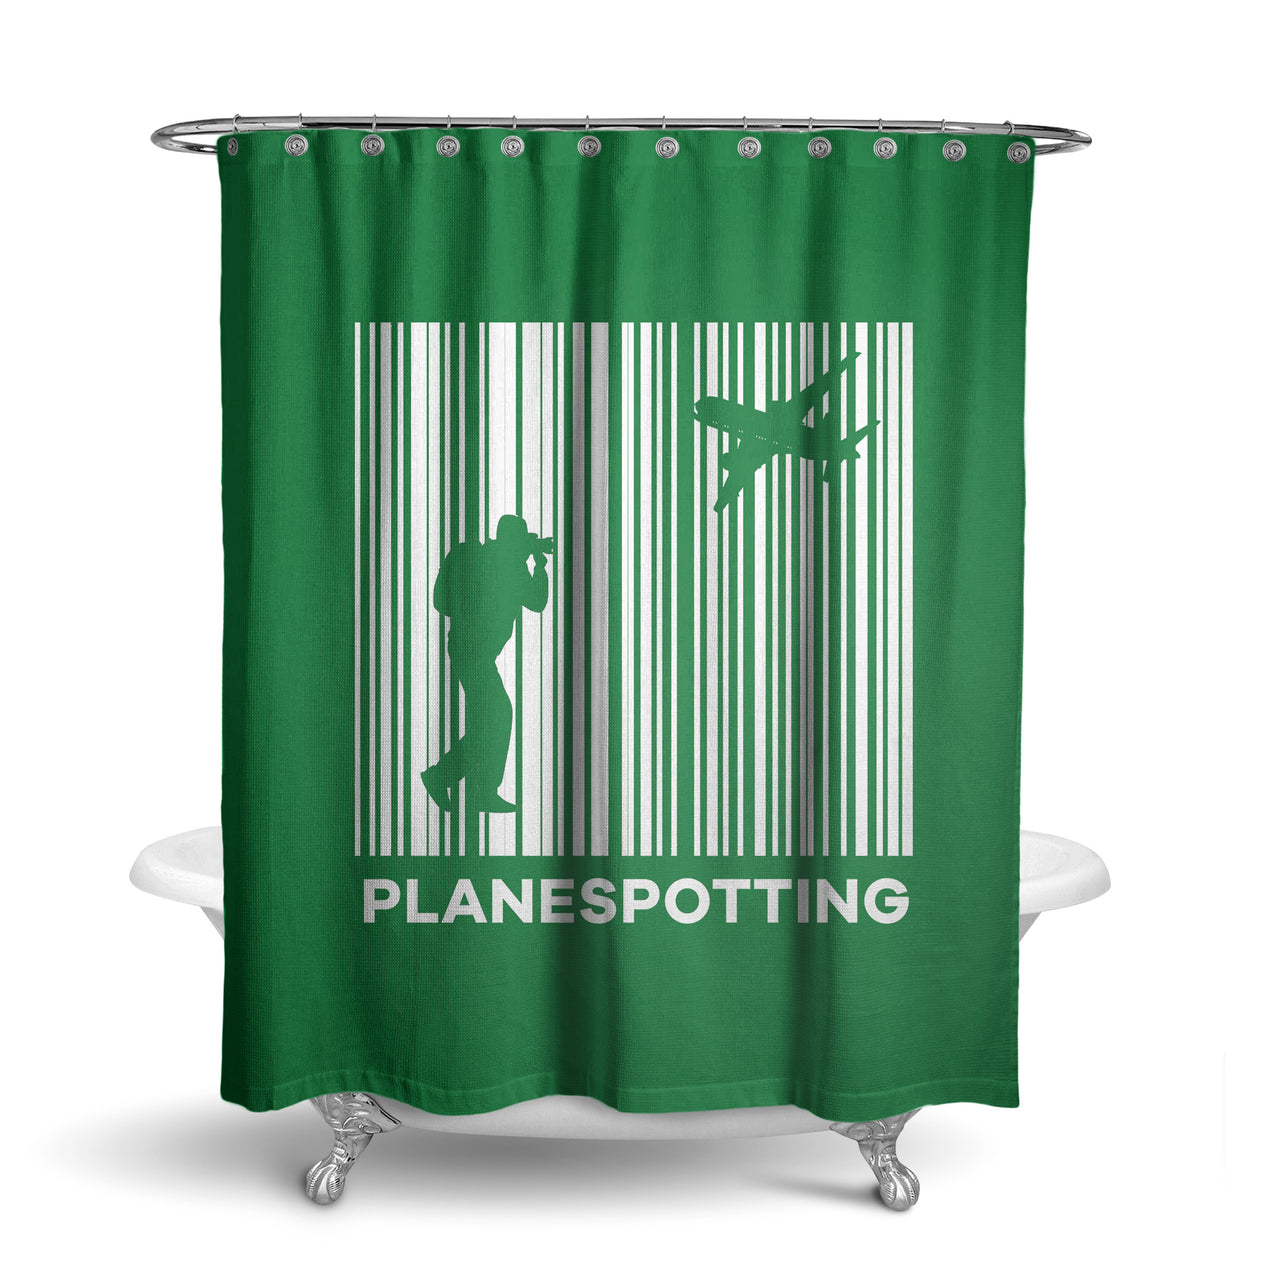 Planespotting Designed Shower Curtains